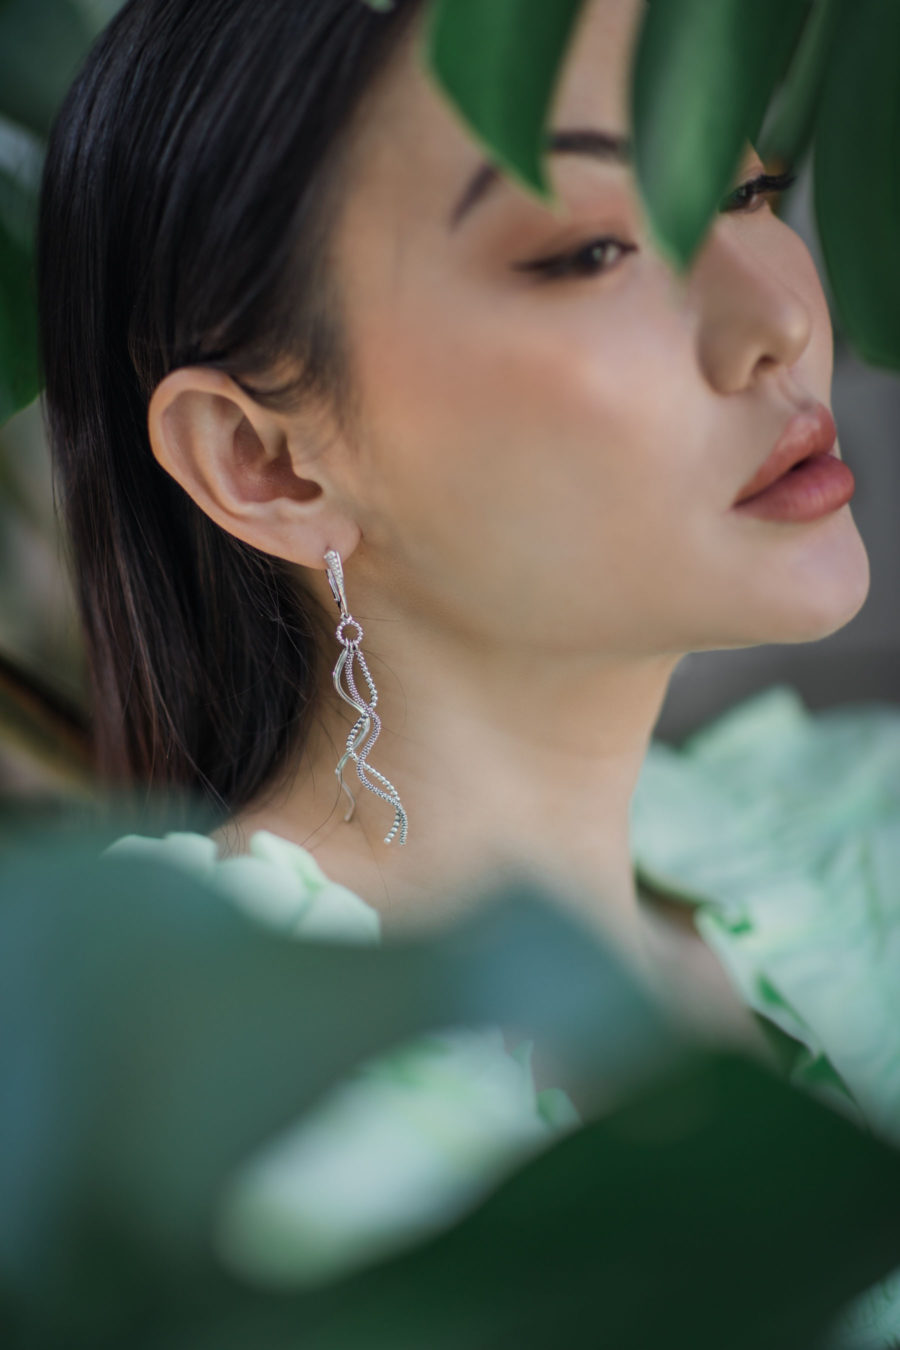 jessica wang wearing fine jewelry by lagos jewelry brand // Jessica Wang - Notjessfashion.com